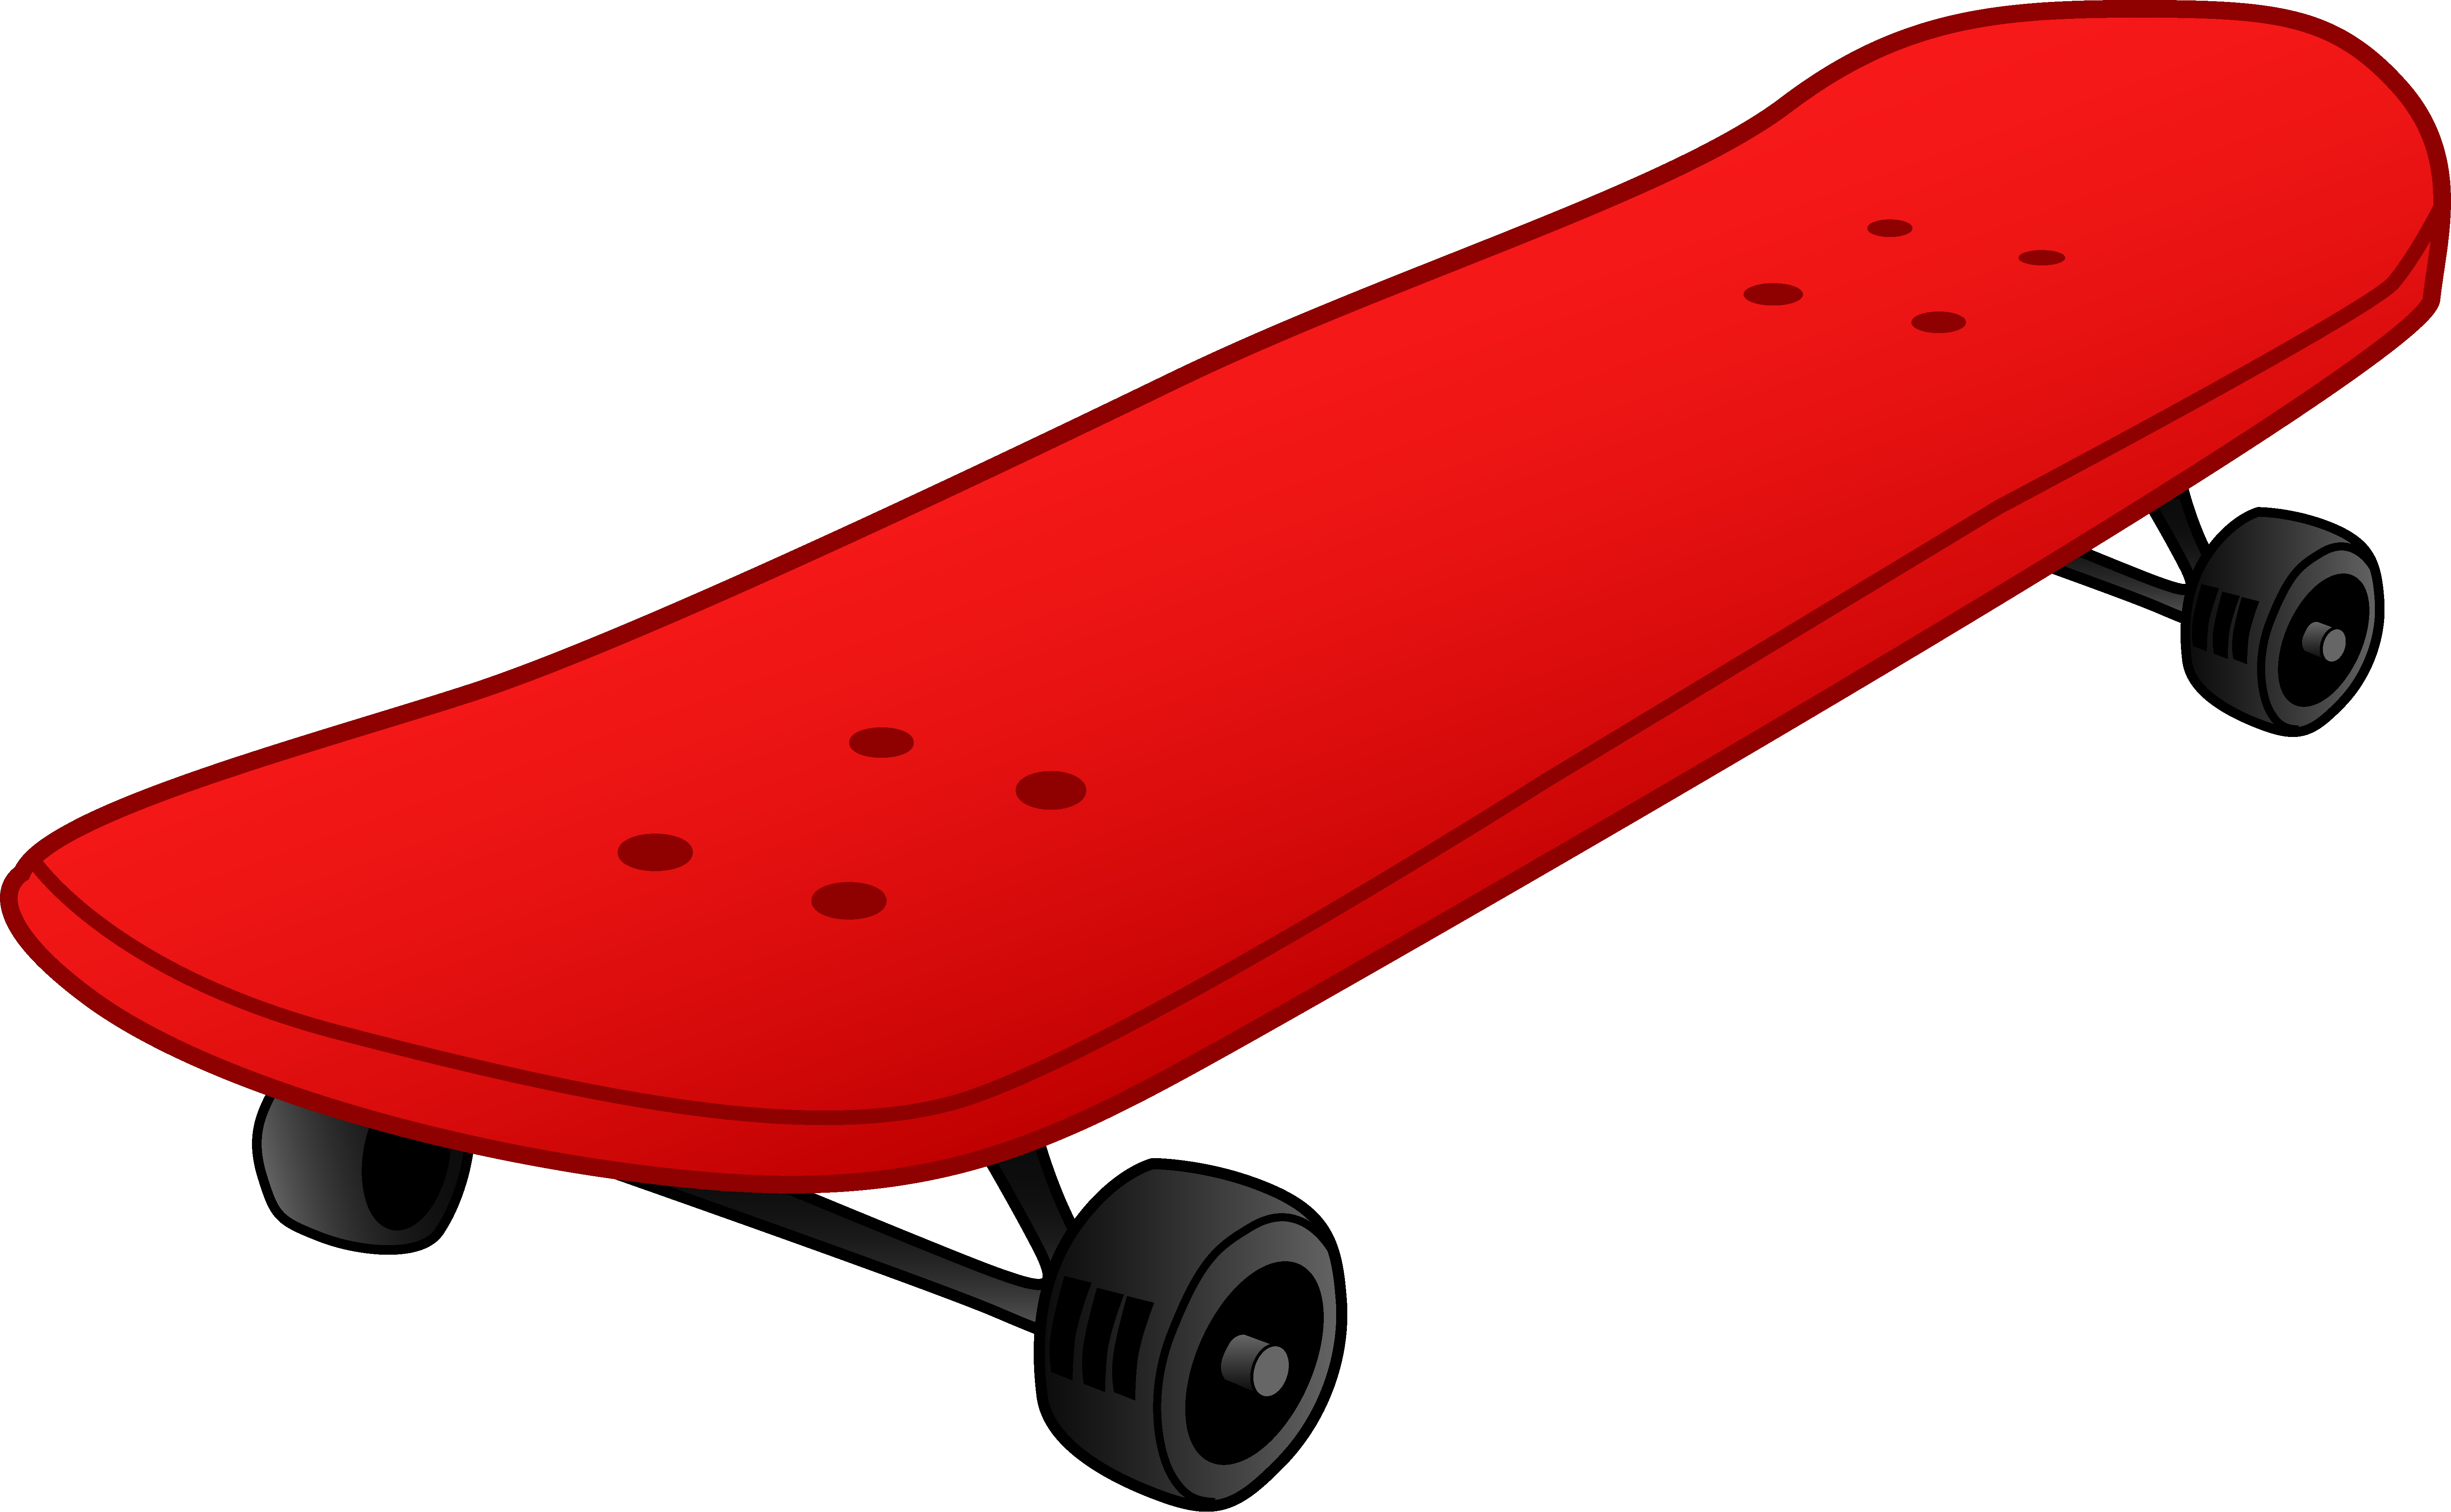 Skateboard Png Hd - Skateboard, Transparent background PNG HD thumbnail